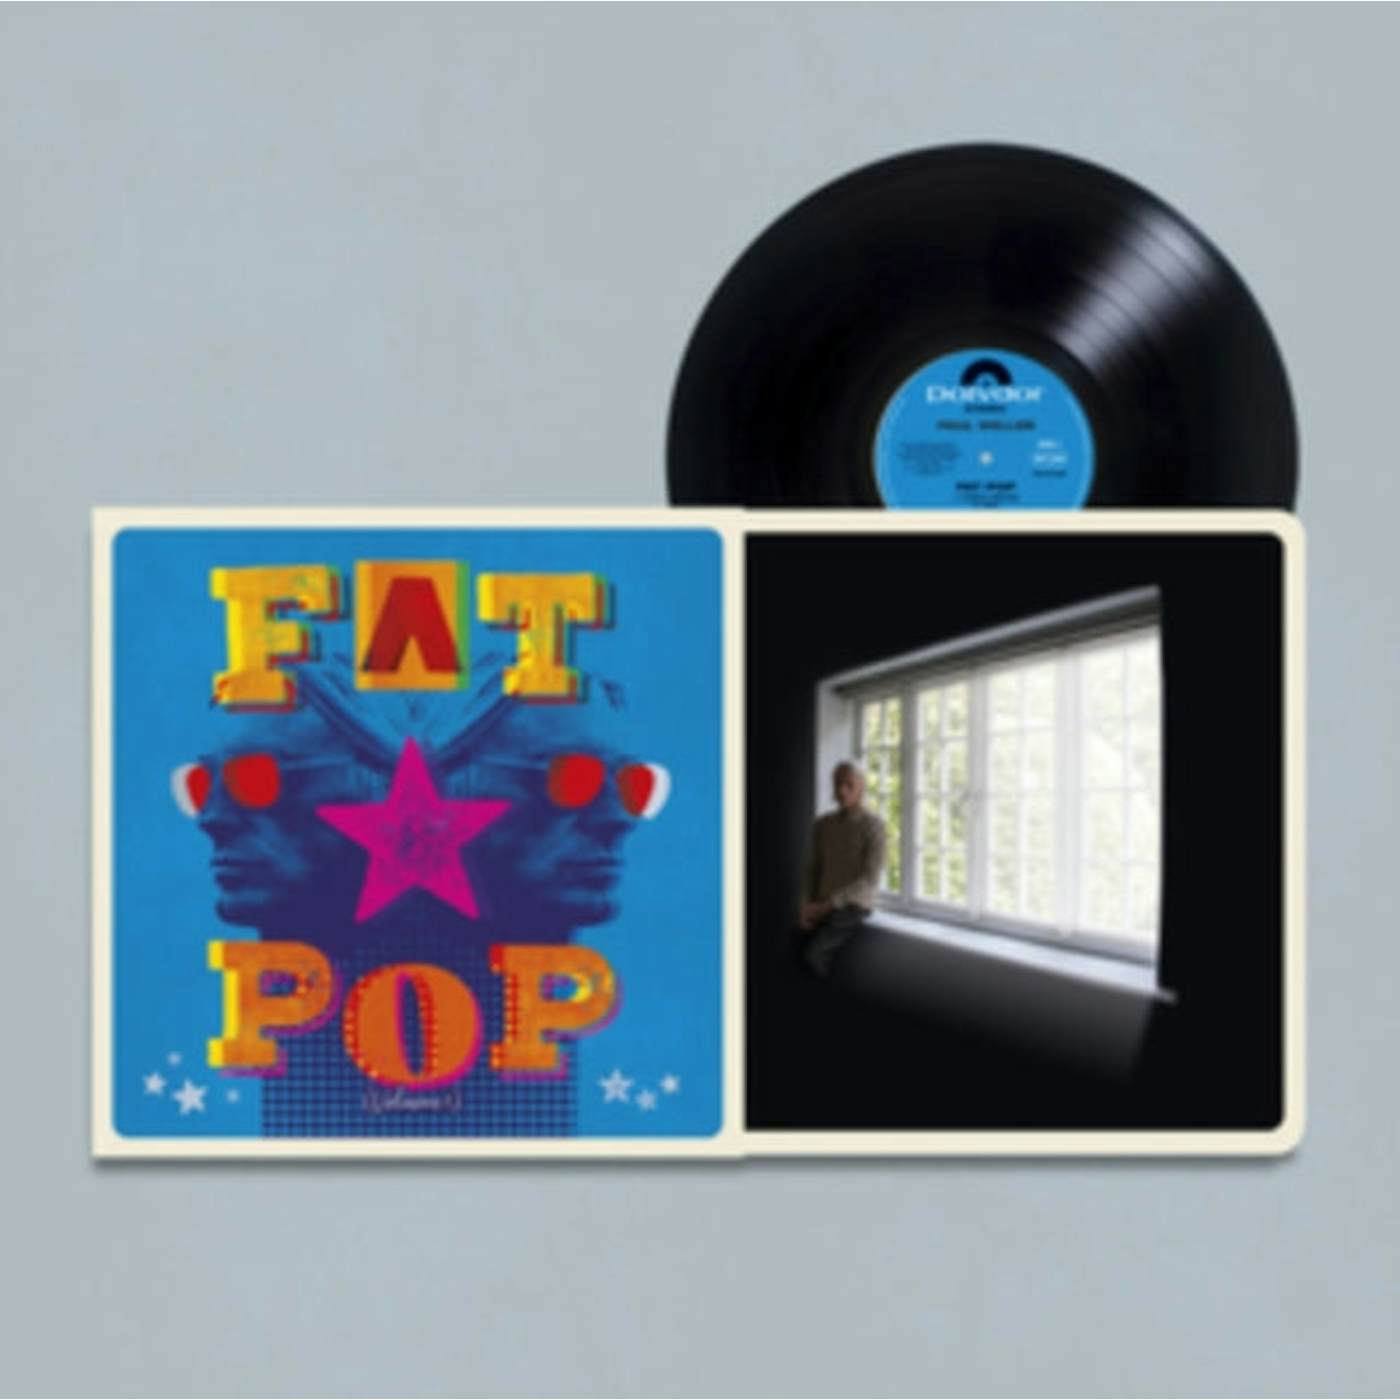 Paul Weller LP Vinyl Record - Fat Pop